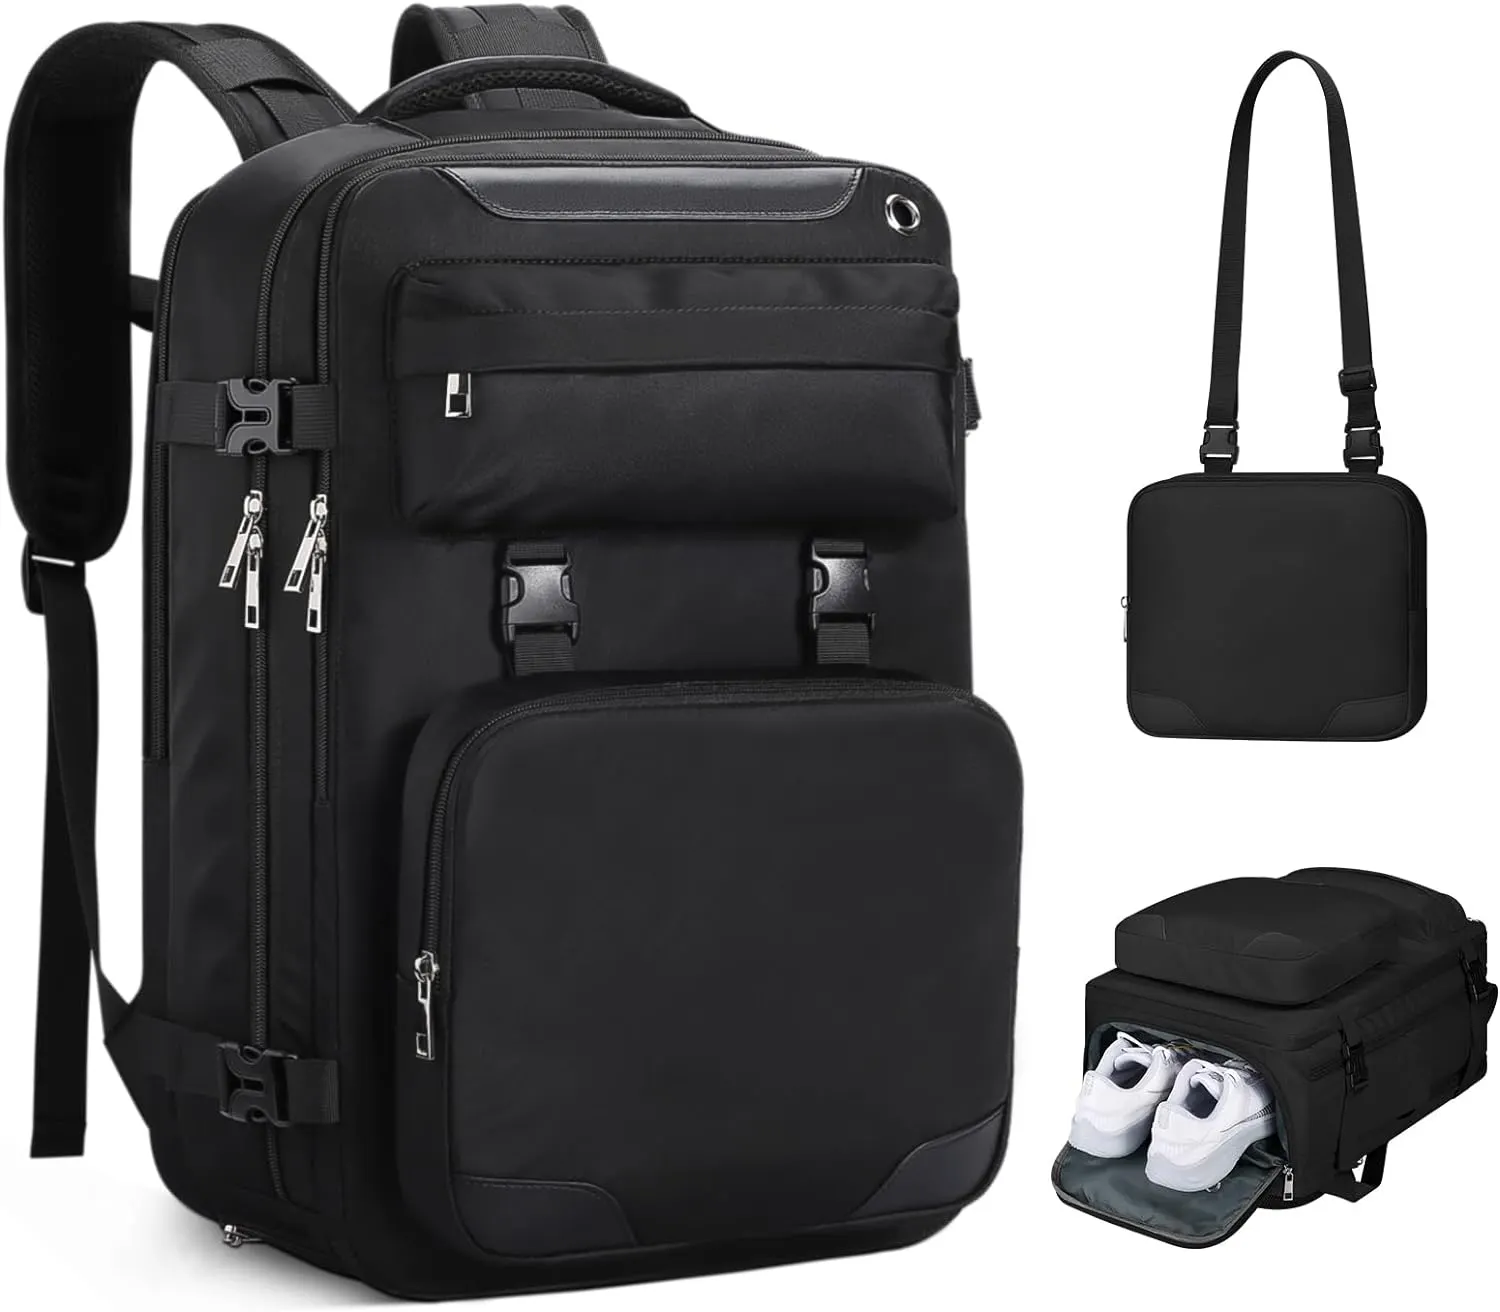 Tas ransel Laptop 35l, tas punggung Laptop 17 inci tahan air, tas selempang yang dapat dilepas, tas ransel perjalanan